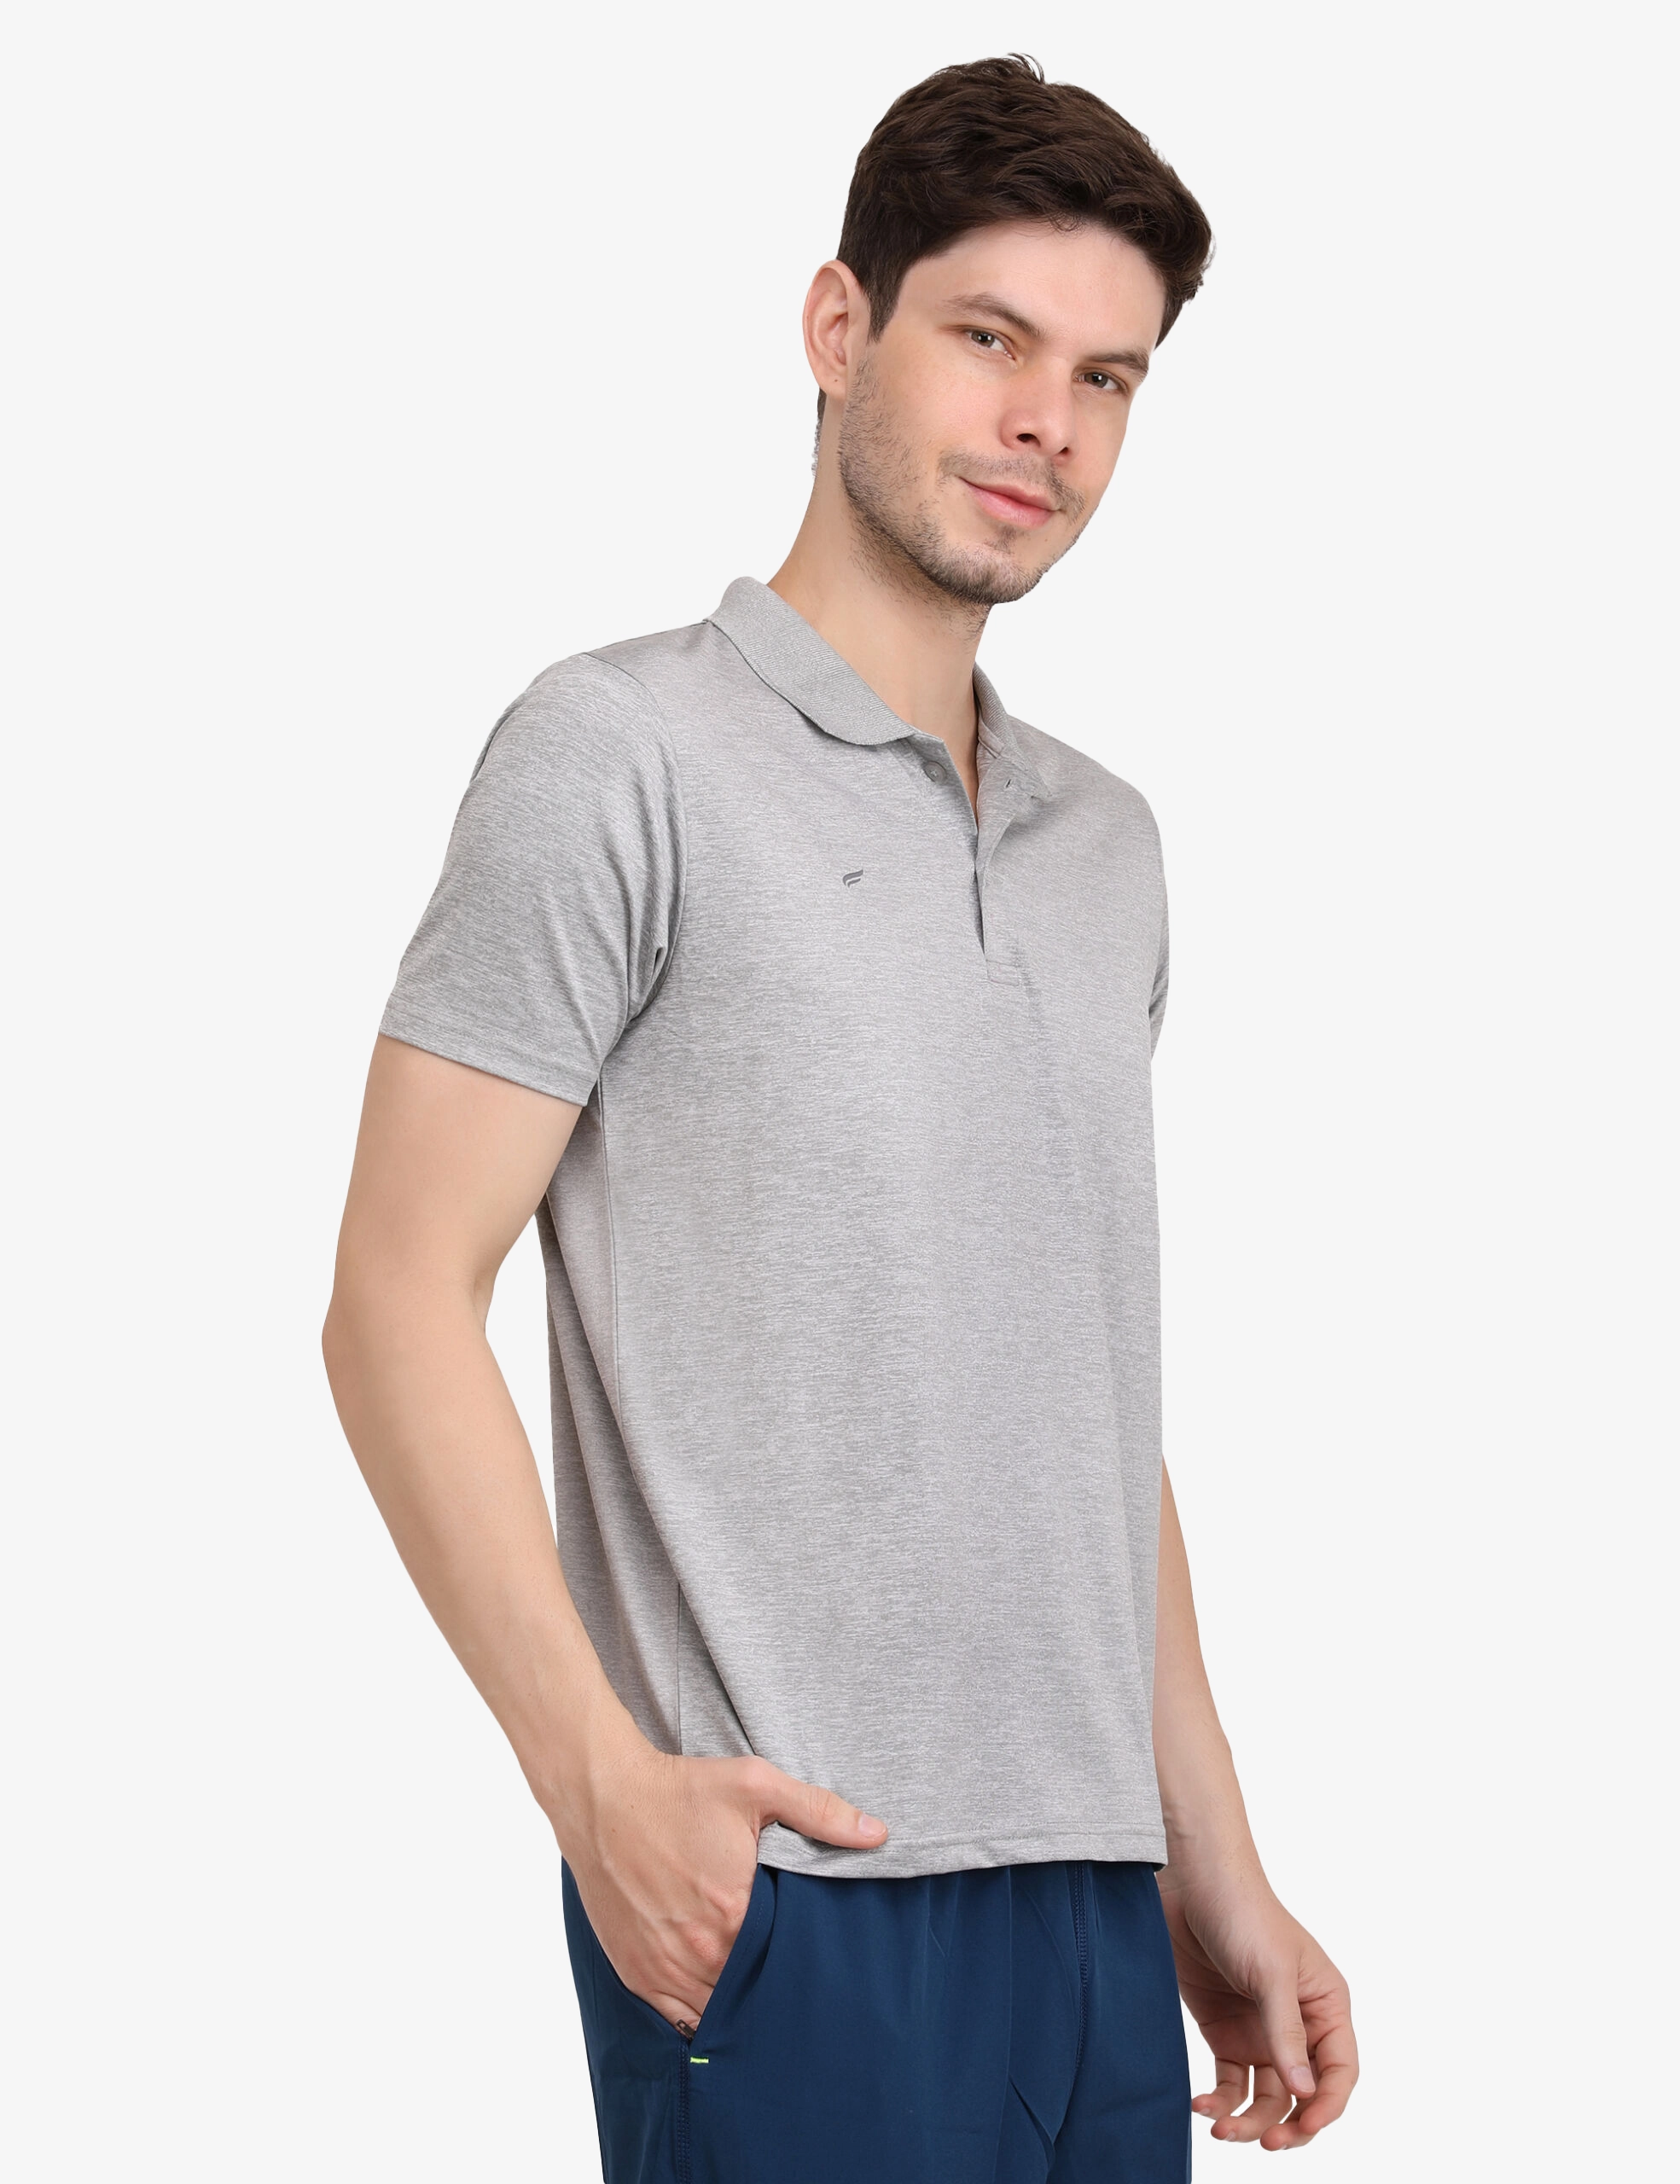 ASI Fest Sports T-Shirt for Men Light Grey Color